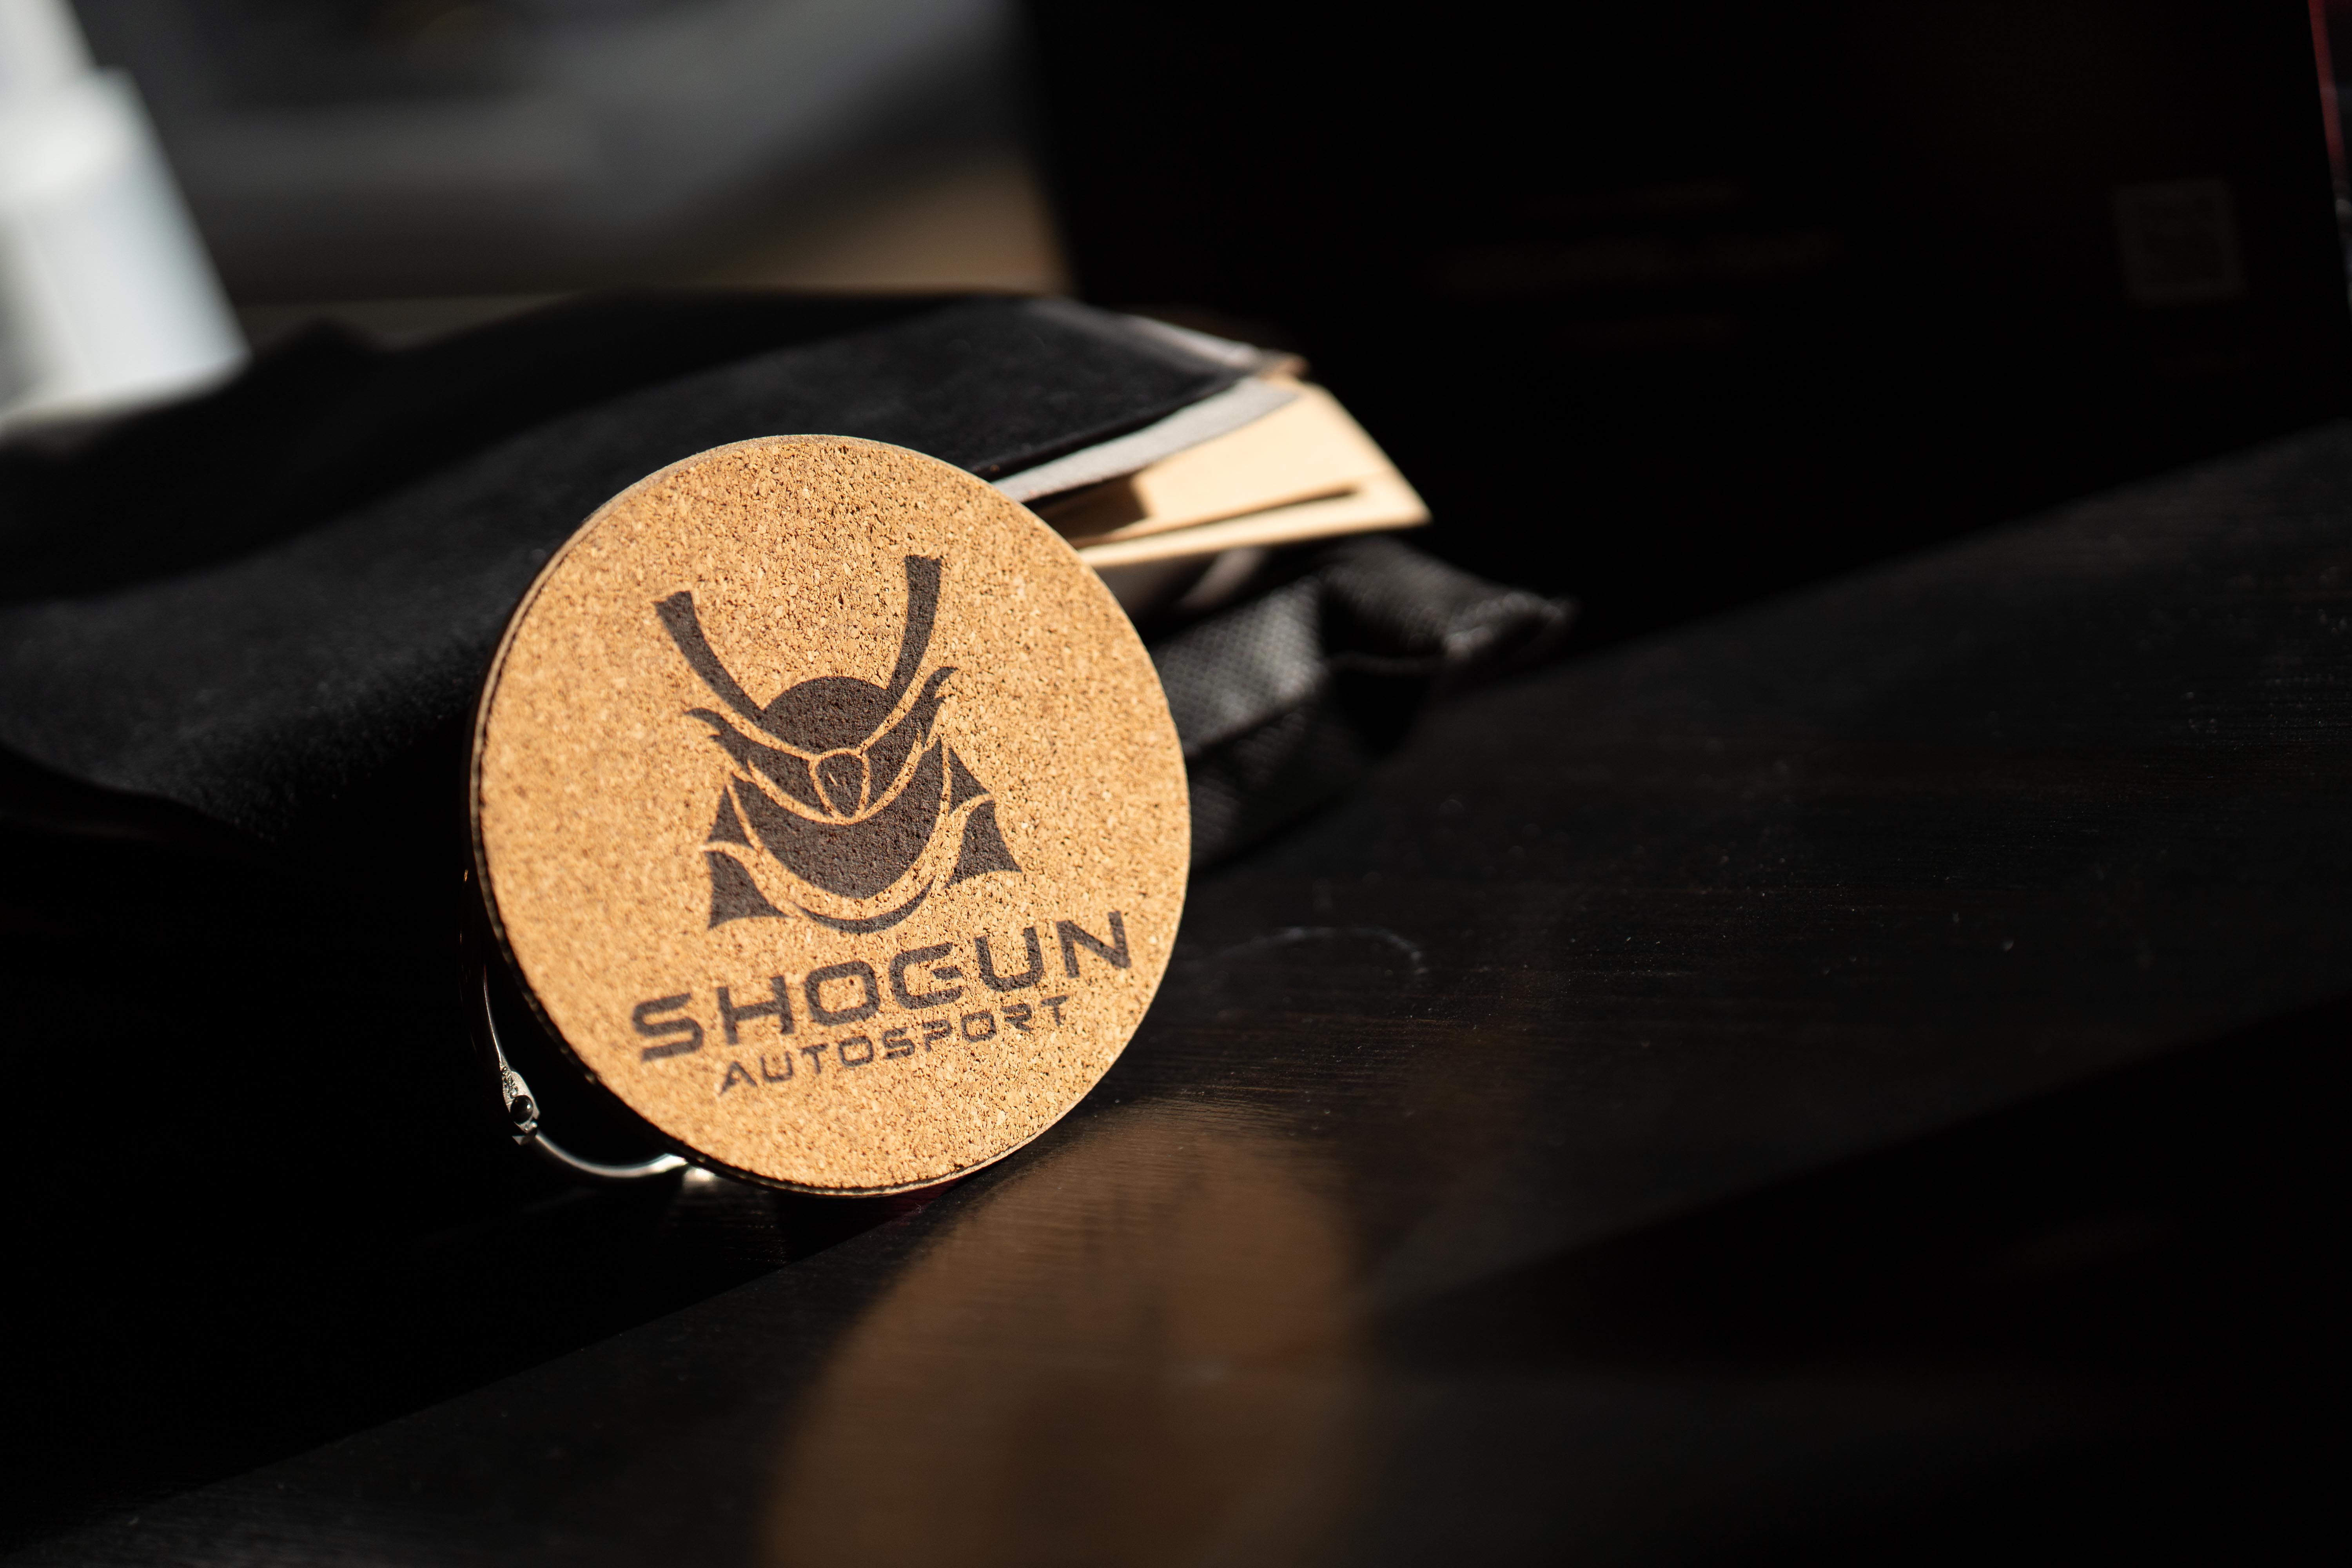 Shogun Autosport Coaster